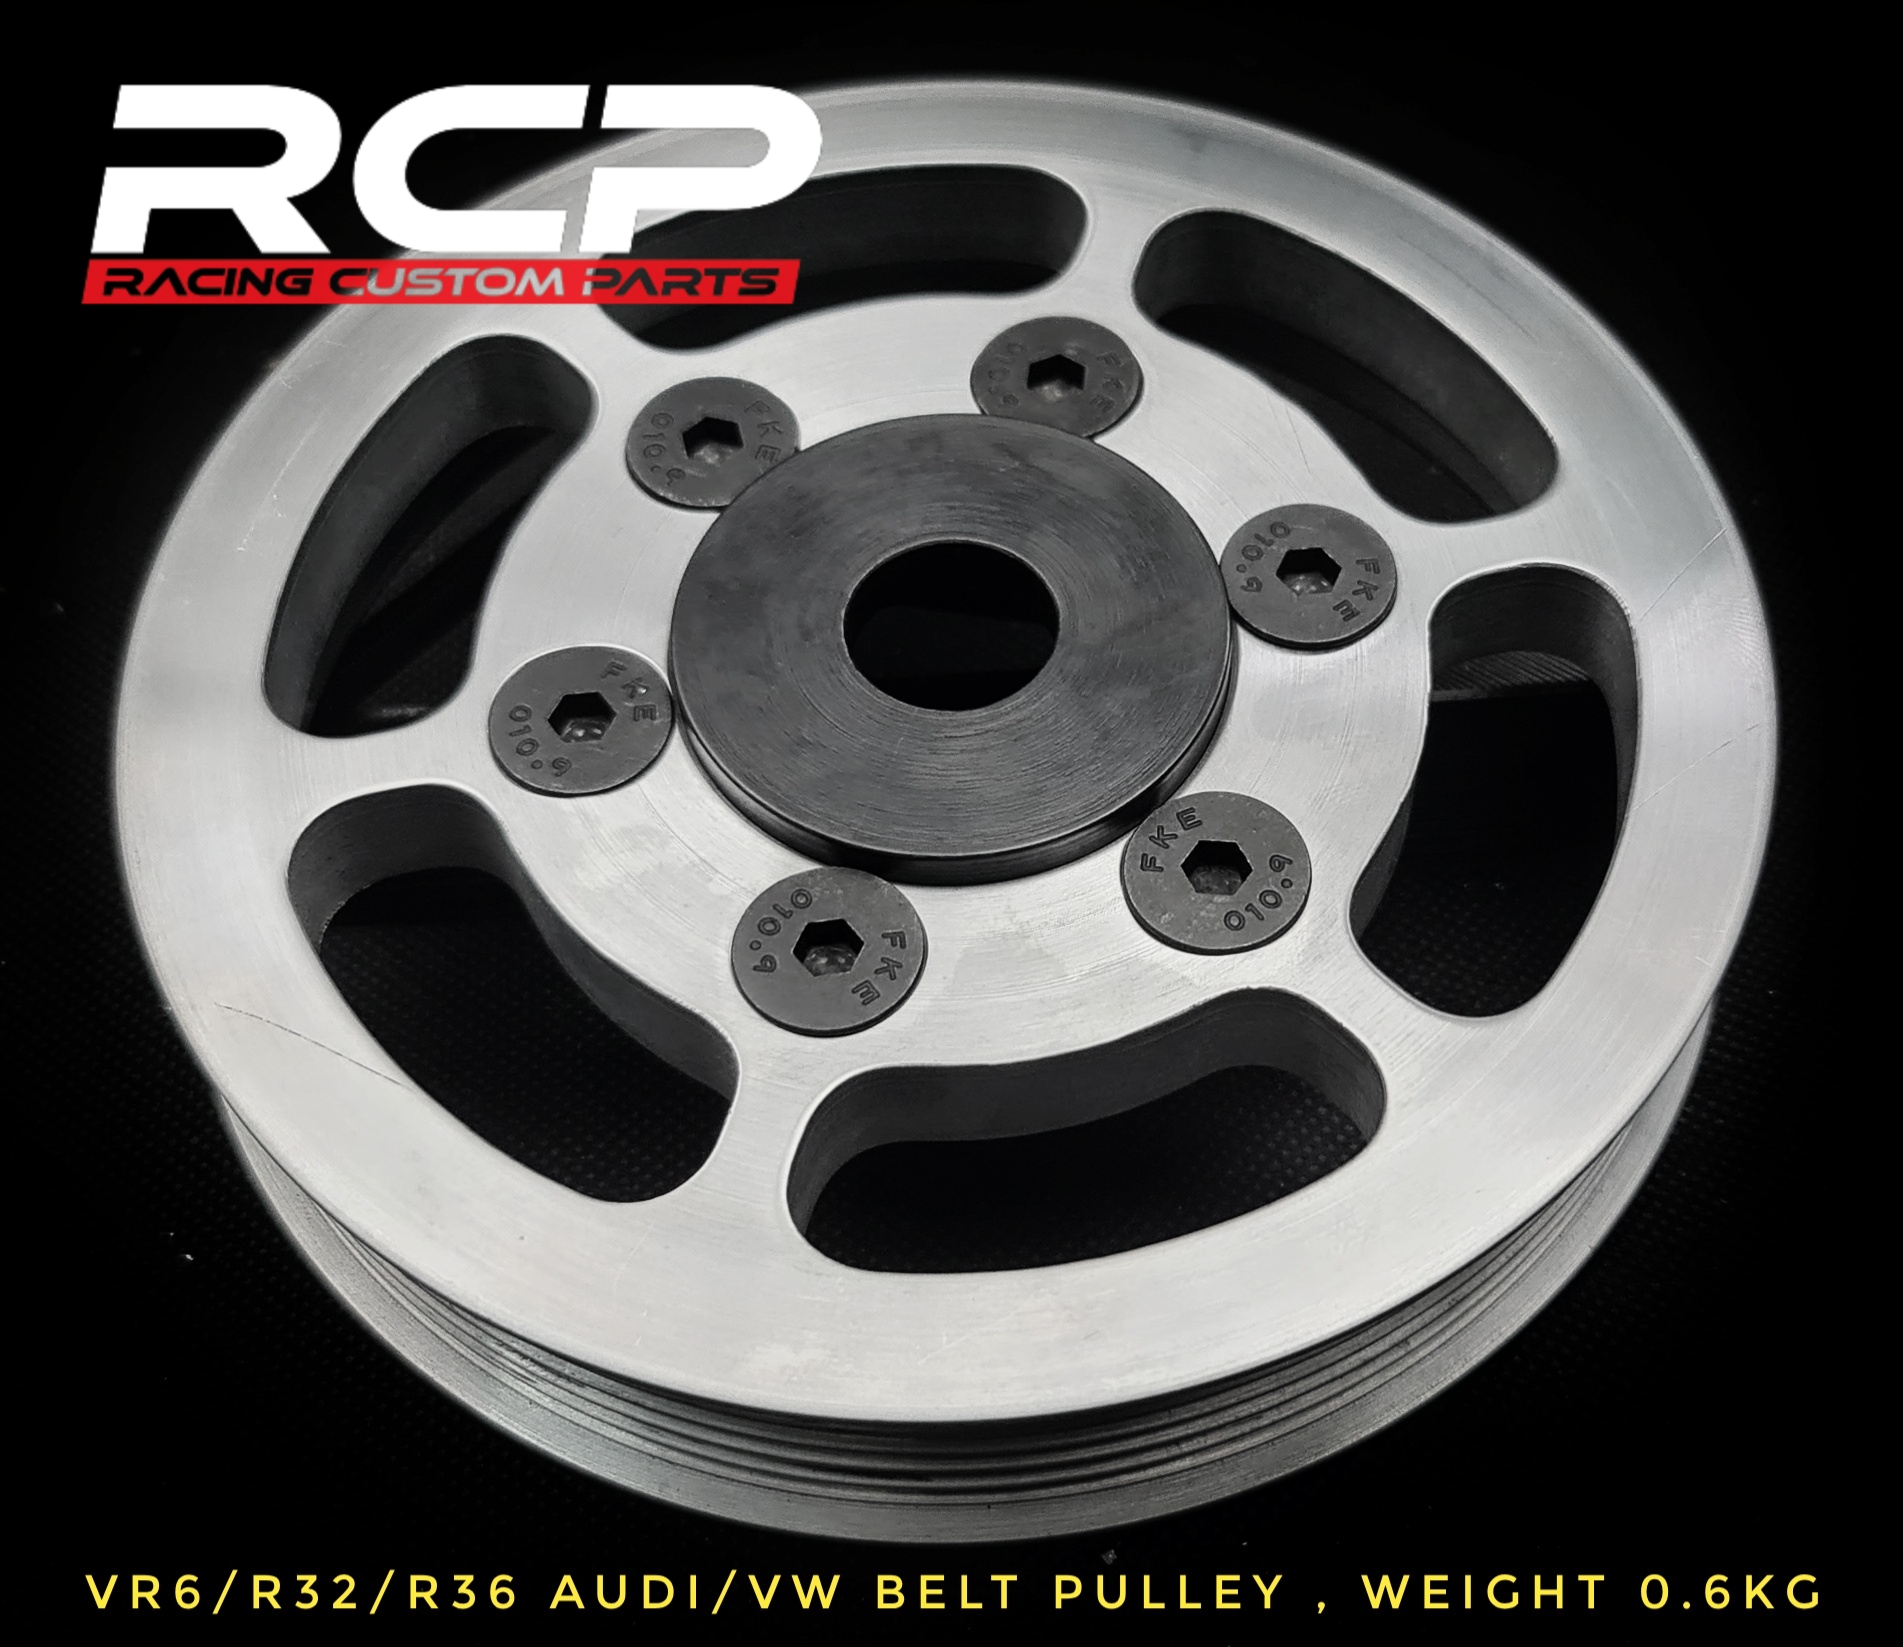 r32 r36 vr6 light belt pulley billet cnc racing custom parts audi trubo vw turbo